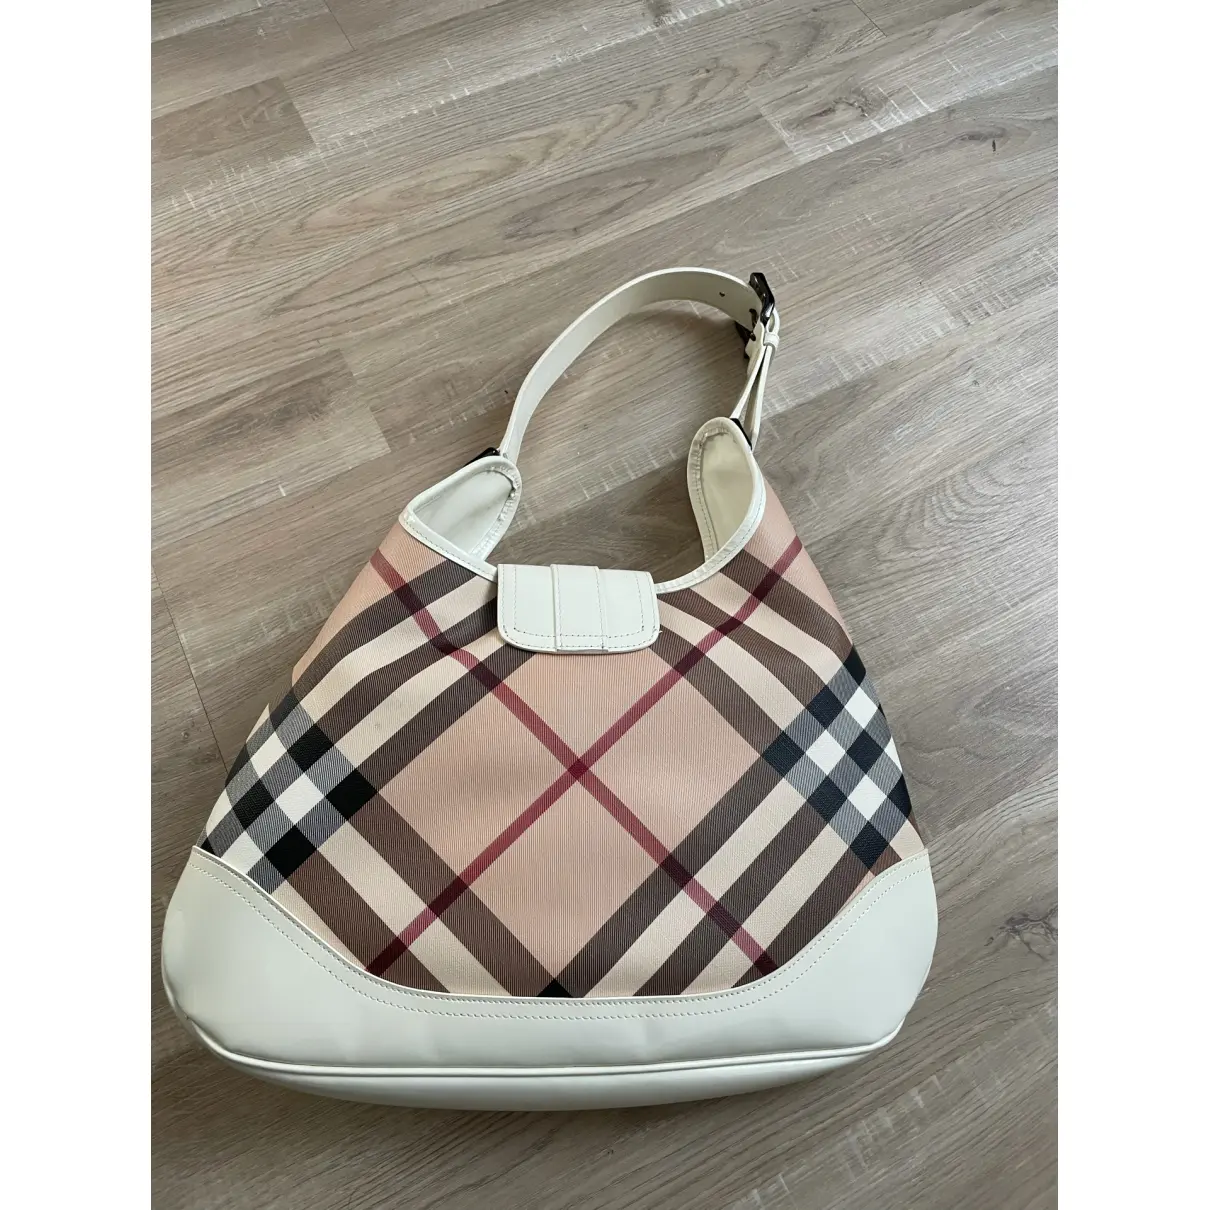 Buy Burberry Brook cloth handbag online